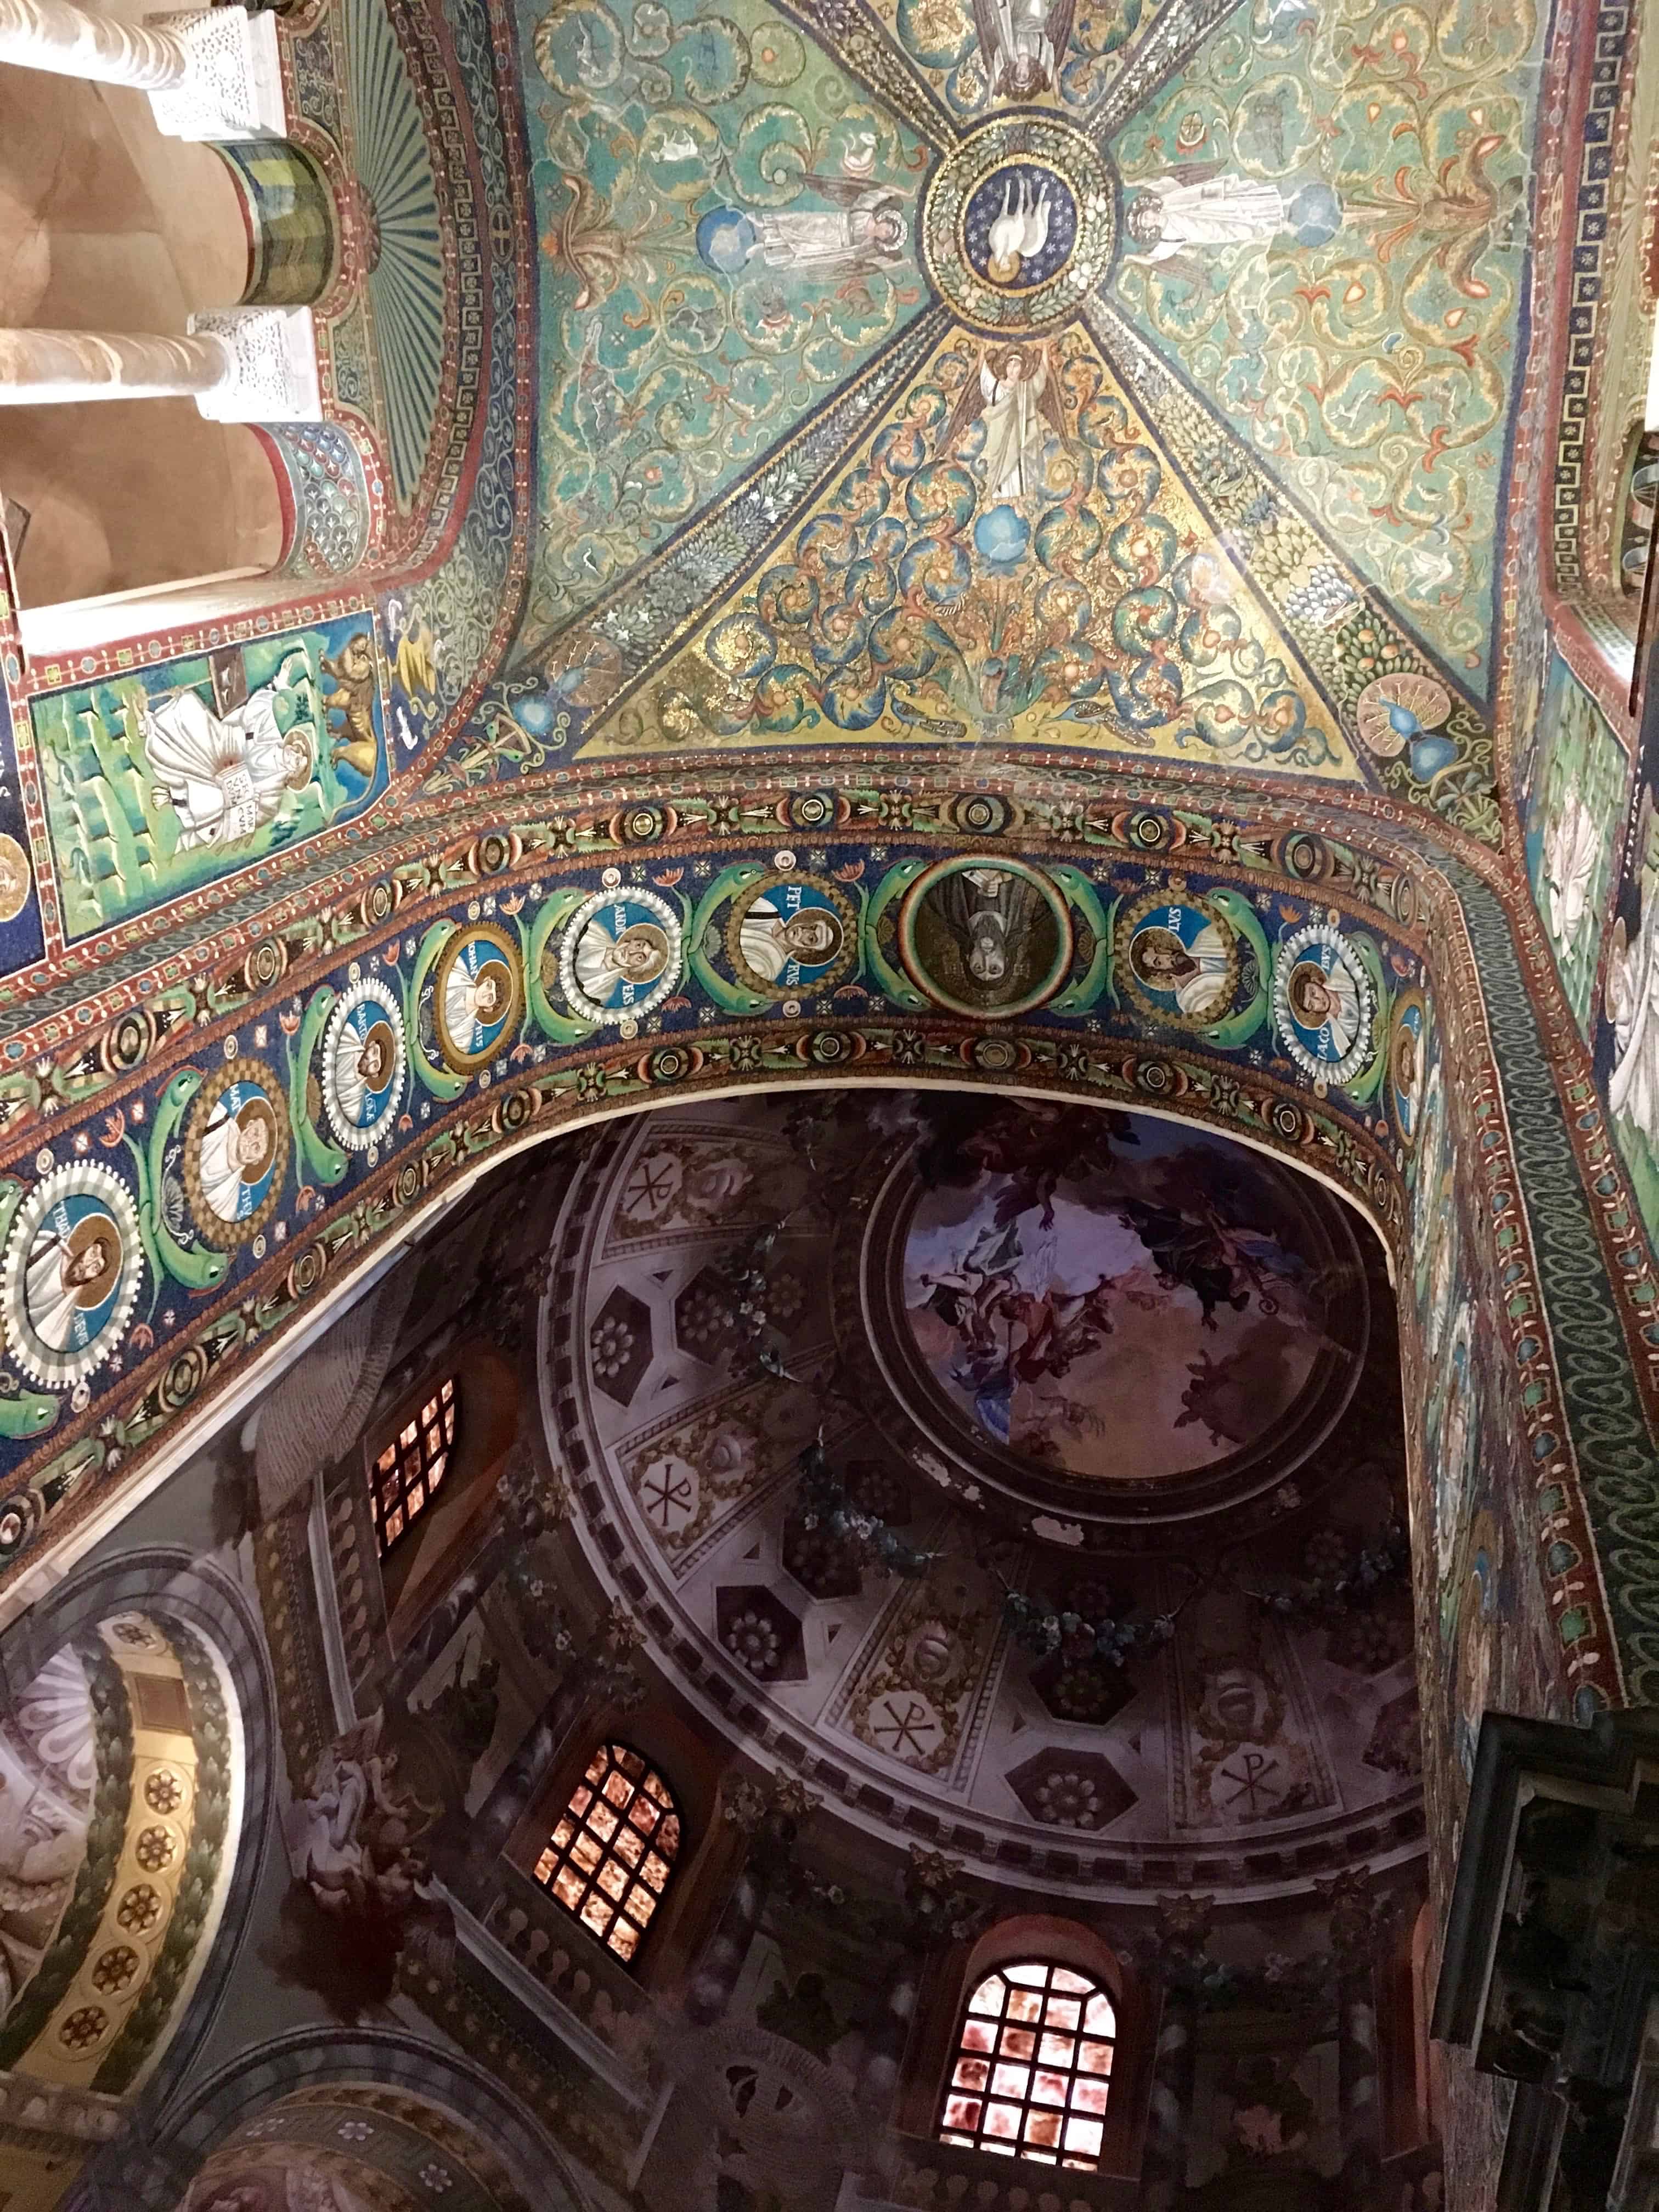 Mind-blowing mosaics interior of the Basilica di San Vitale, Ravenna, Italy